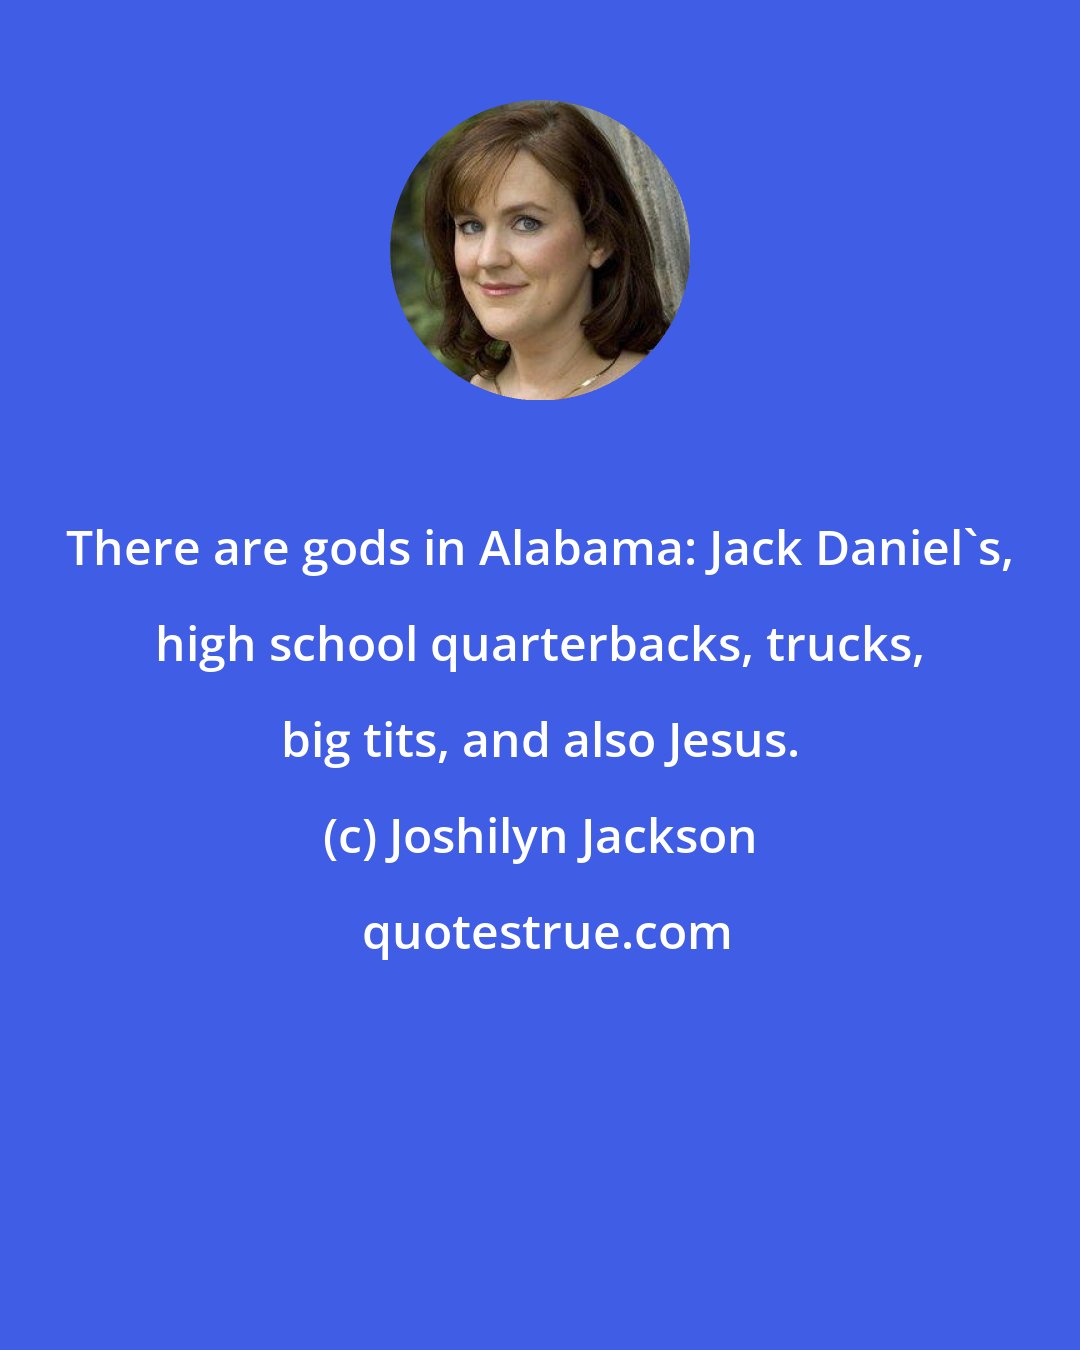 Joshilyn Jackson: There are gods in Alabama: Jack Daniel's, high school quarterbacks, trucks, big tits, and also Jesus.